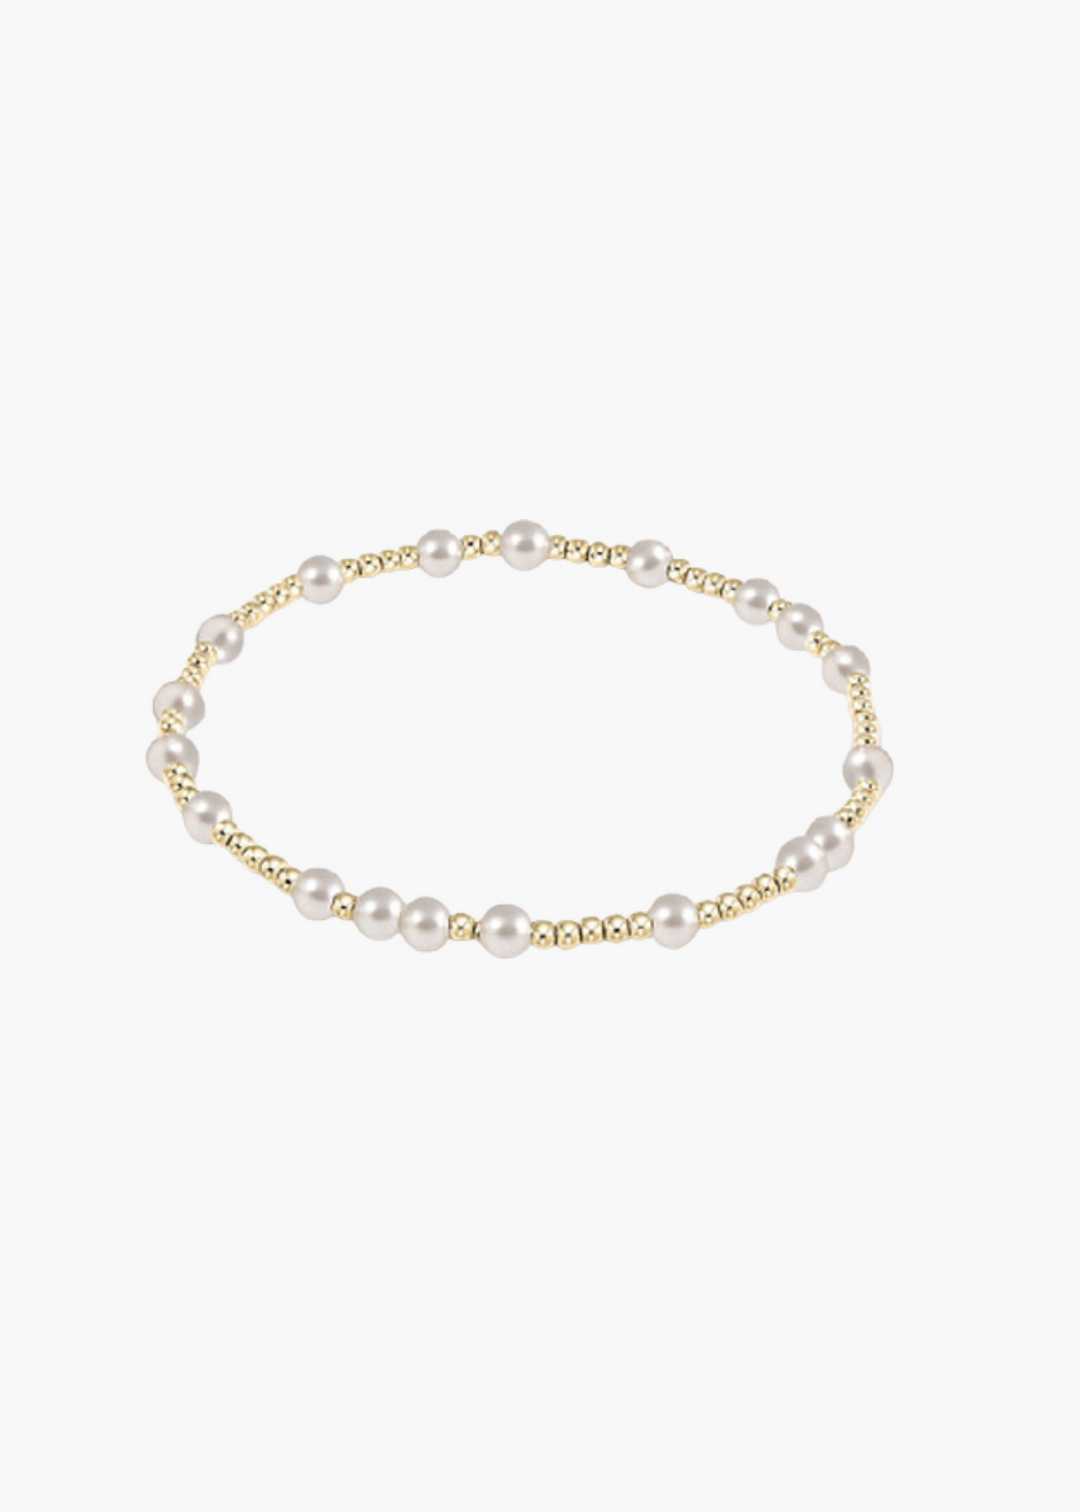 Egirl Hope Unwritten Bracelet - Pearl